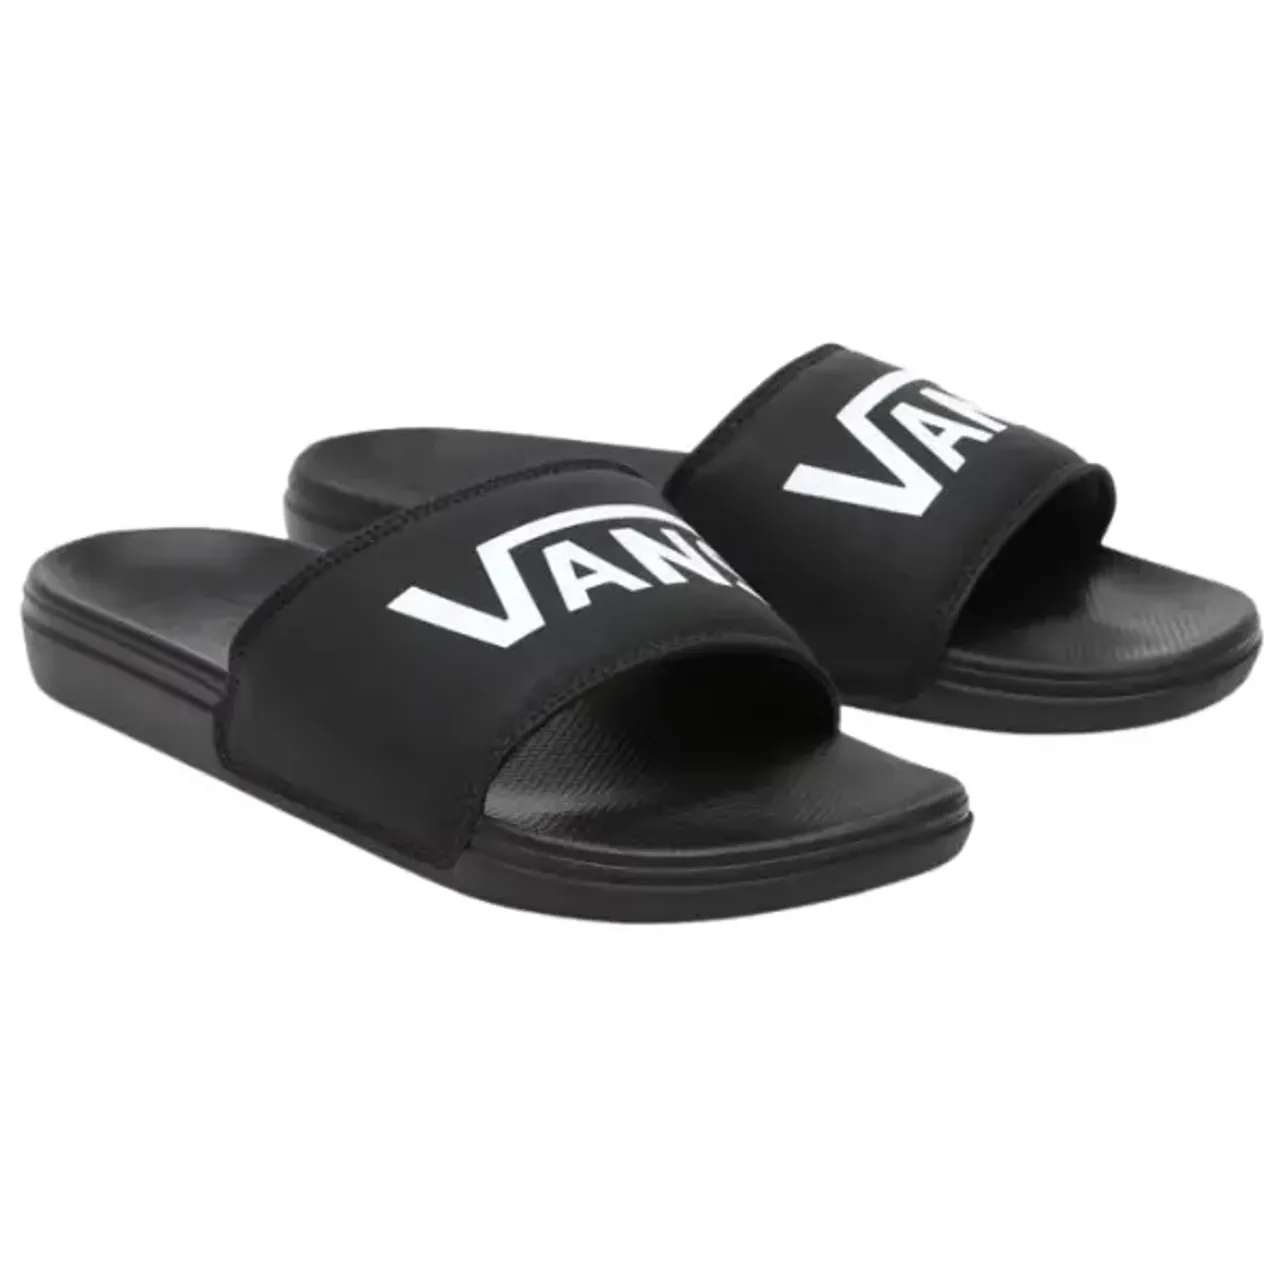 Vans La Costa Slide-On (Black